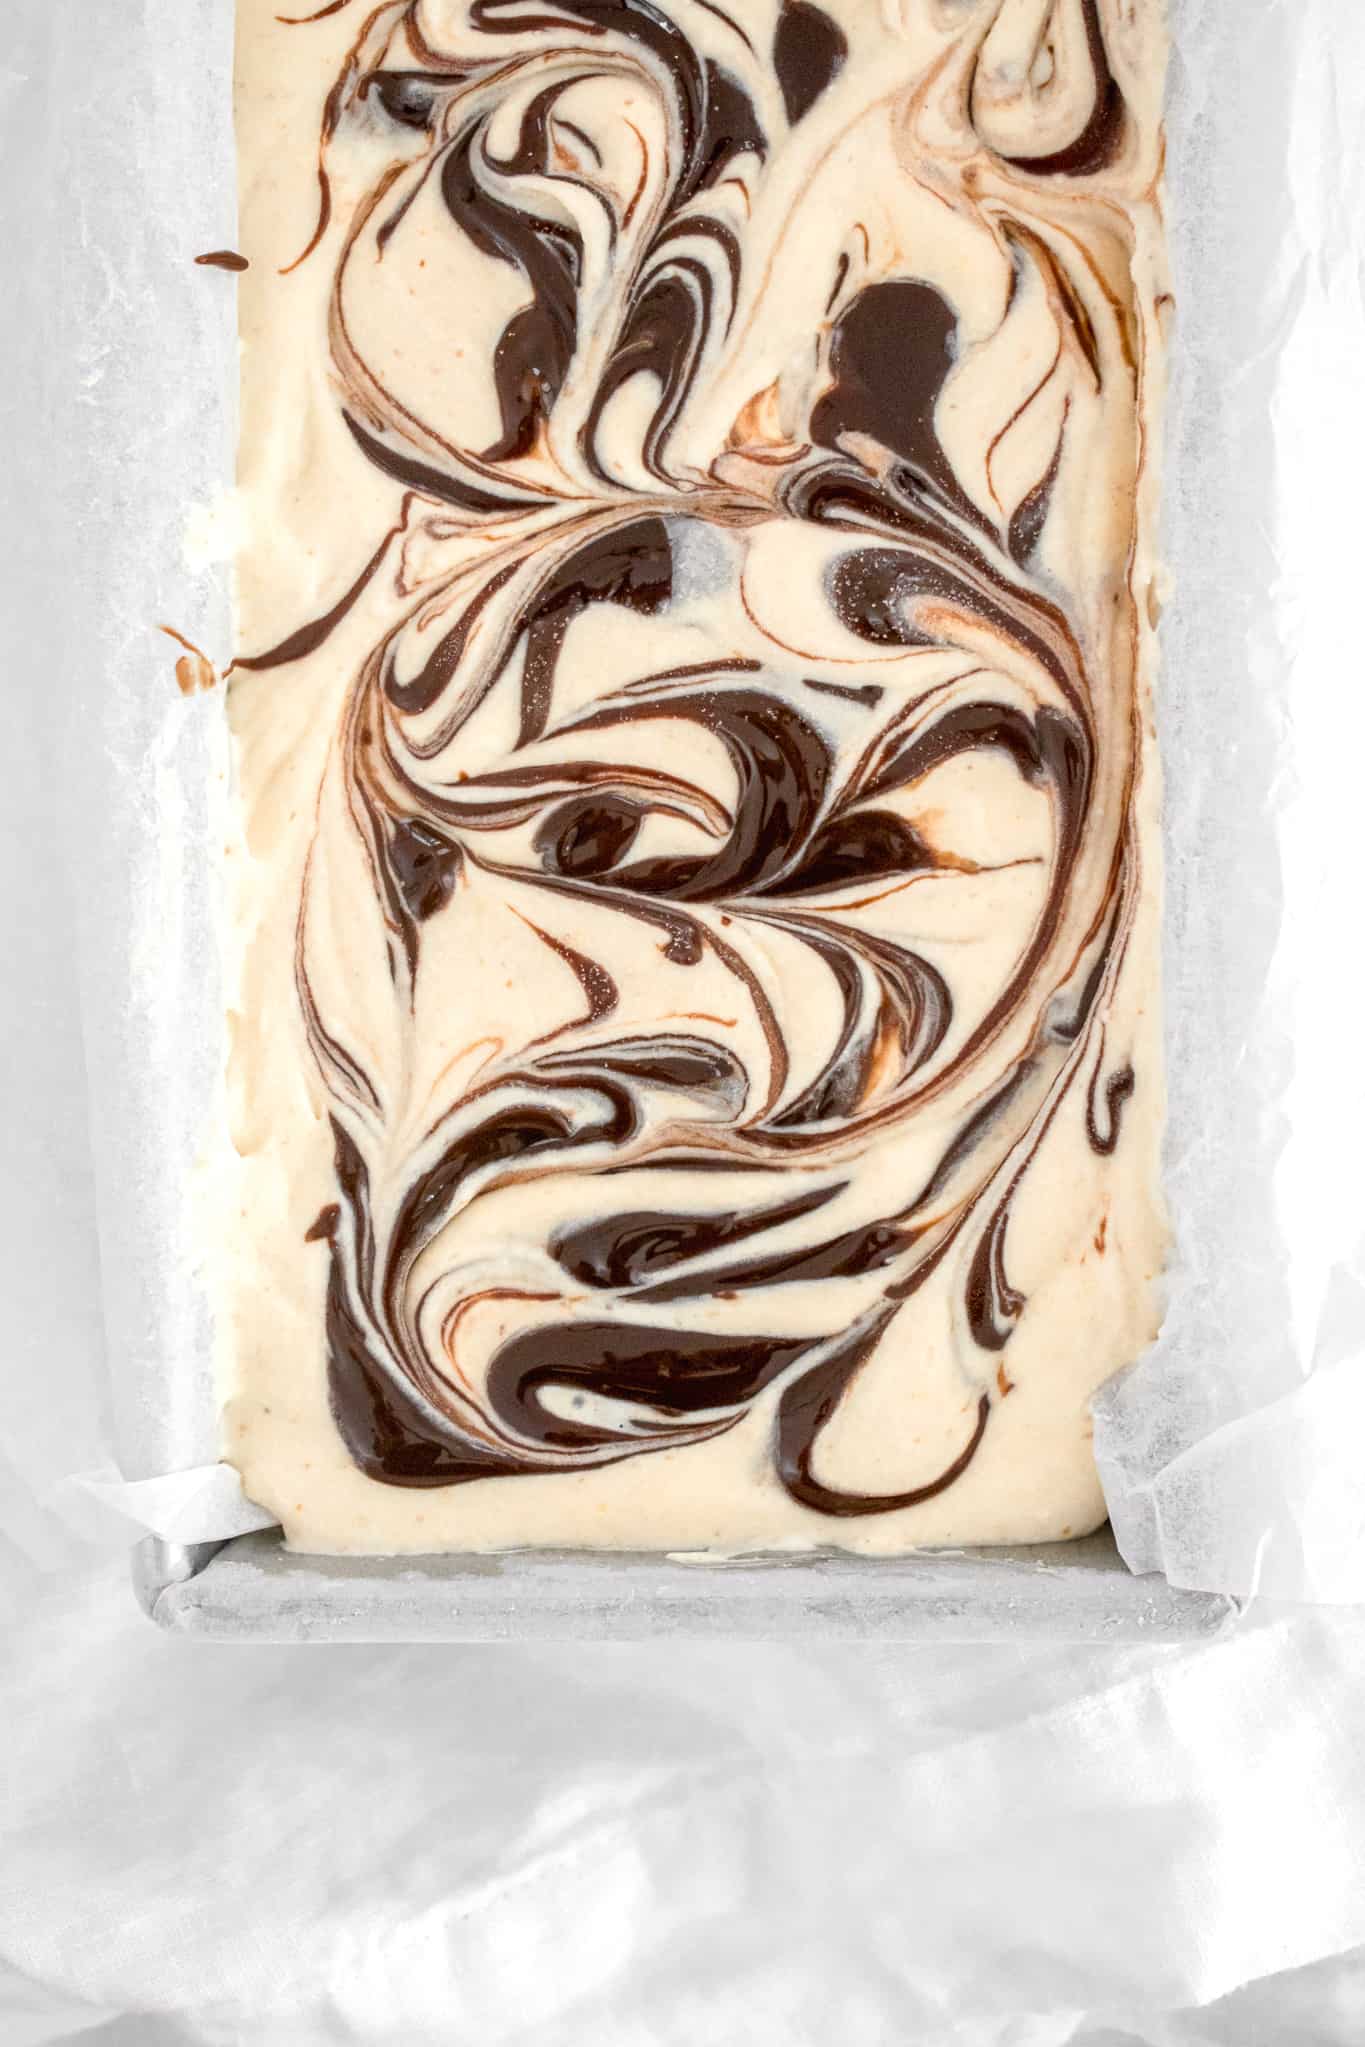 graham ice cream with chocolate swirl from above.